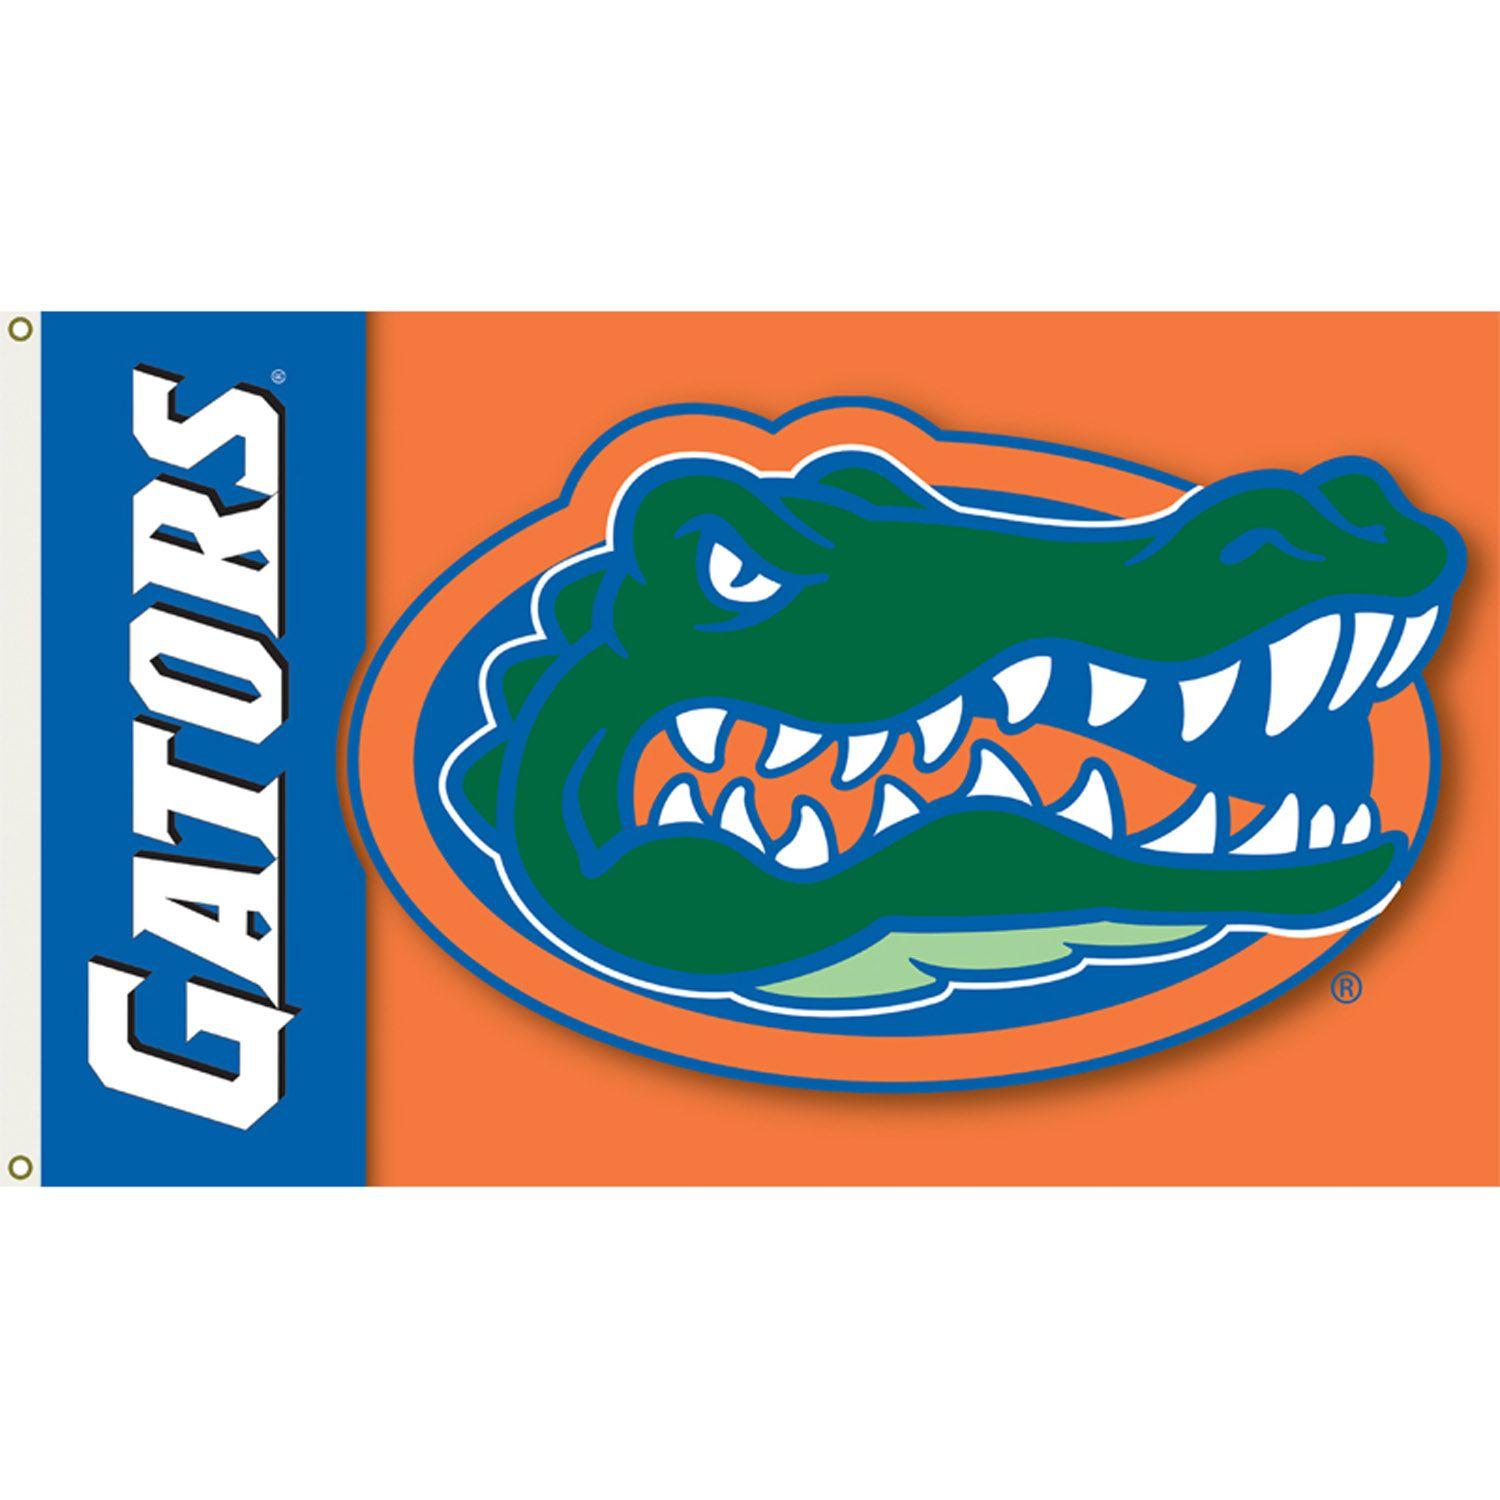 FL Gators Logo - Florida Gators 3ft x 5ft Team Flag - Logo Design 2